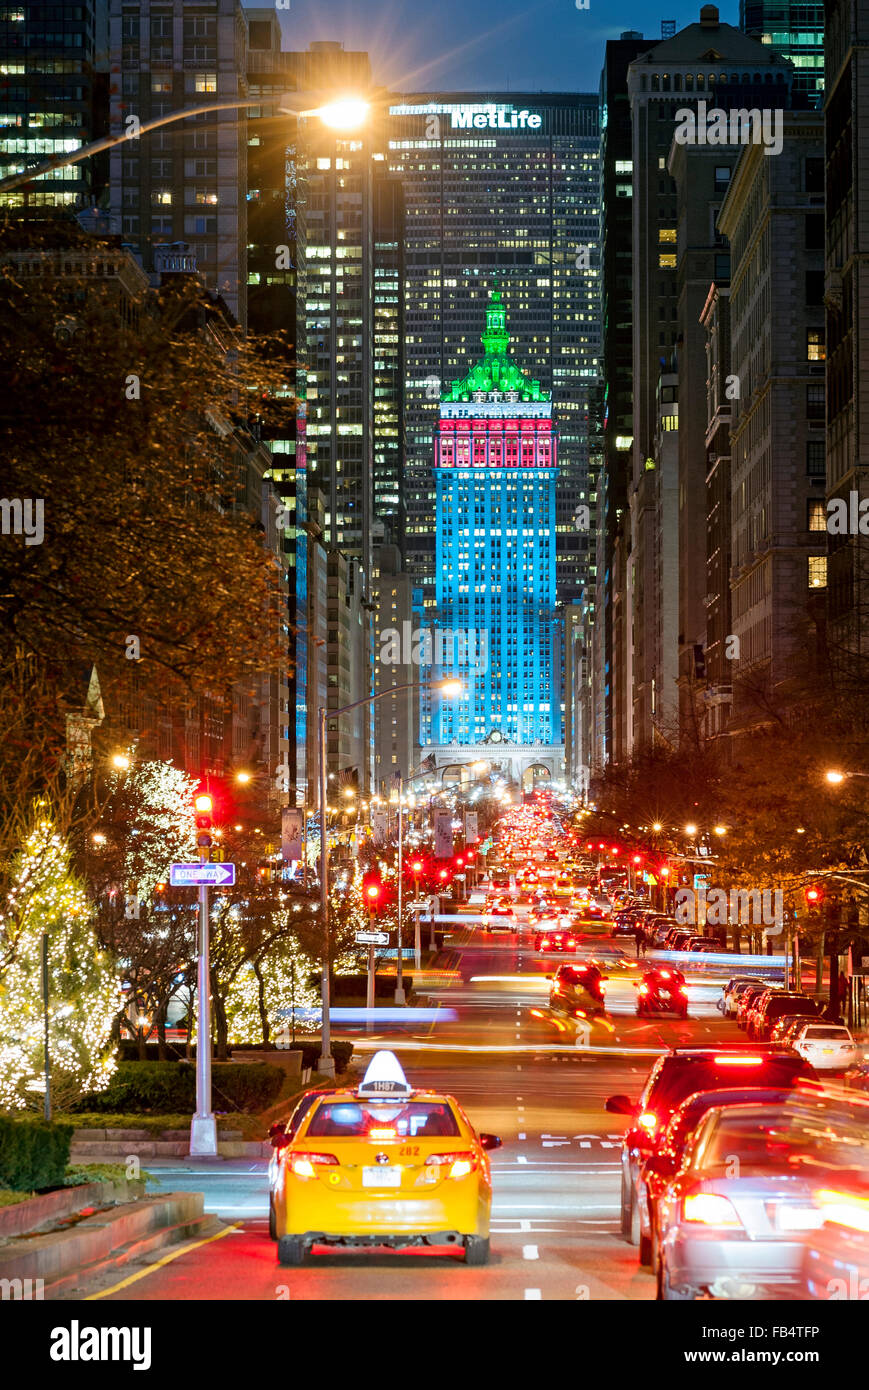 New York New York Street Park Avenue New York City Décorations Trafic d'arbres de Noël Banque D'Images